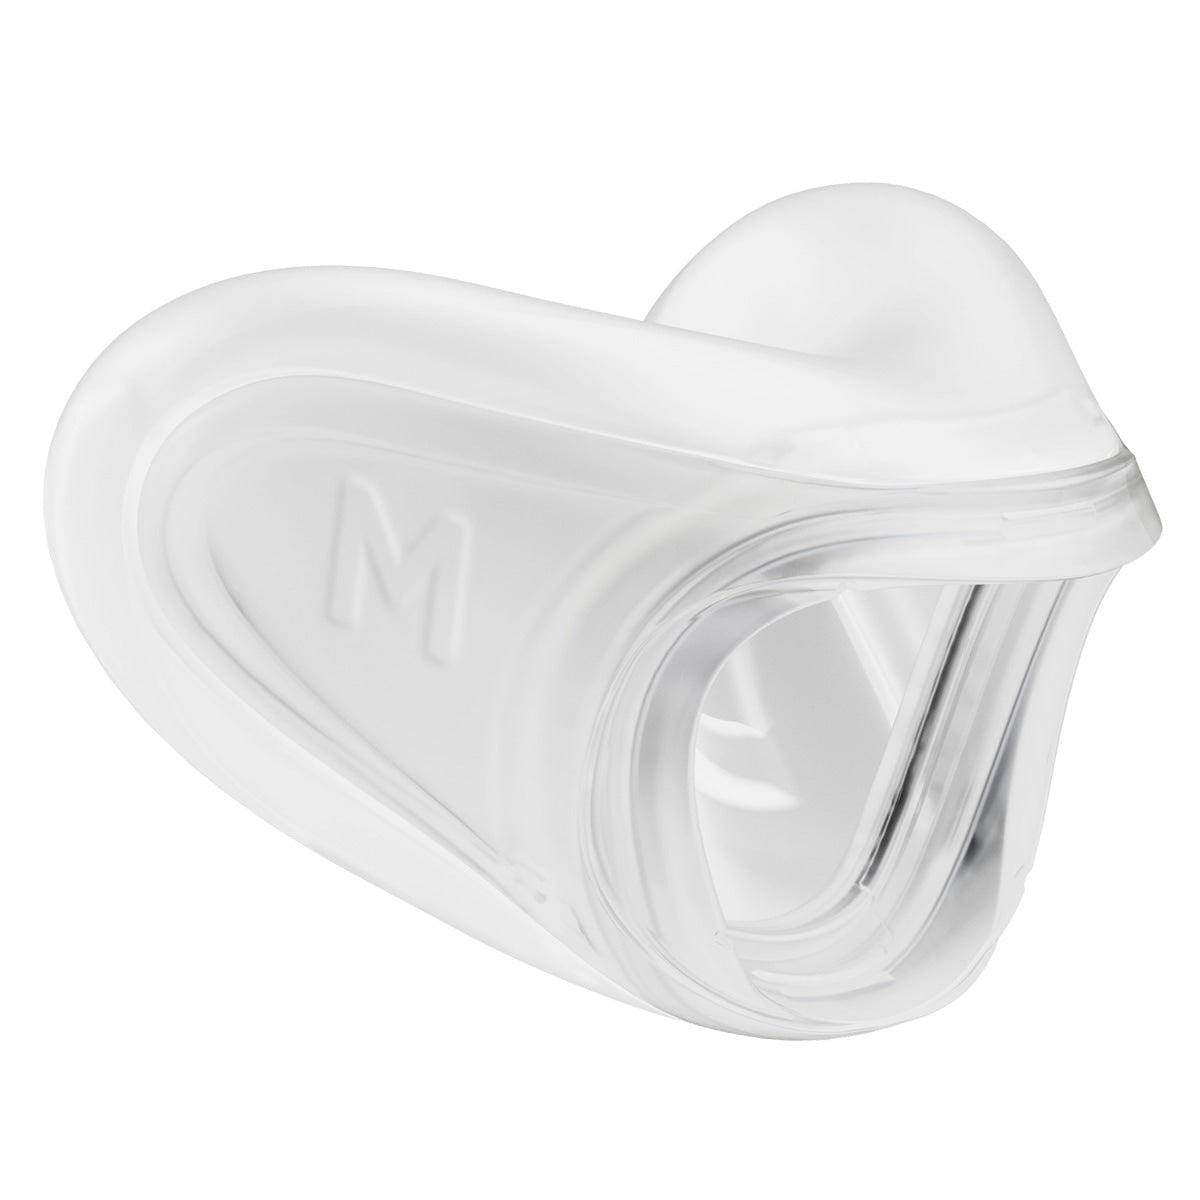 Nasal Cushion for Solo Nasal CPAP/BiPAP Masks